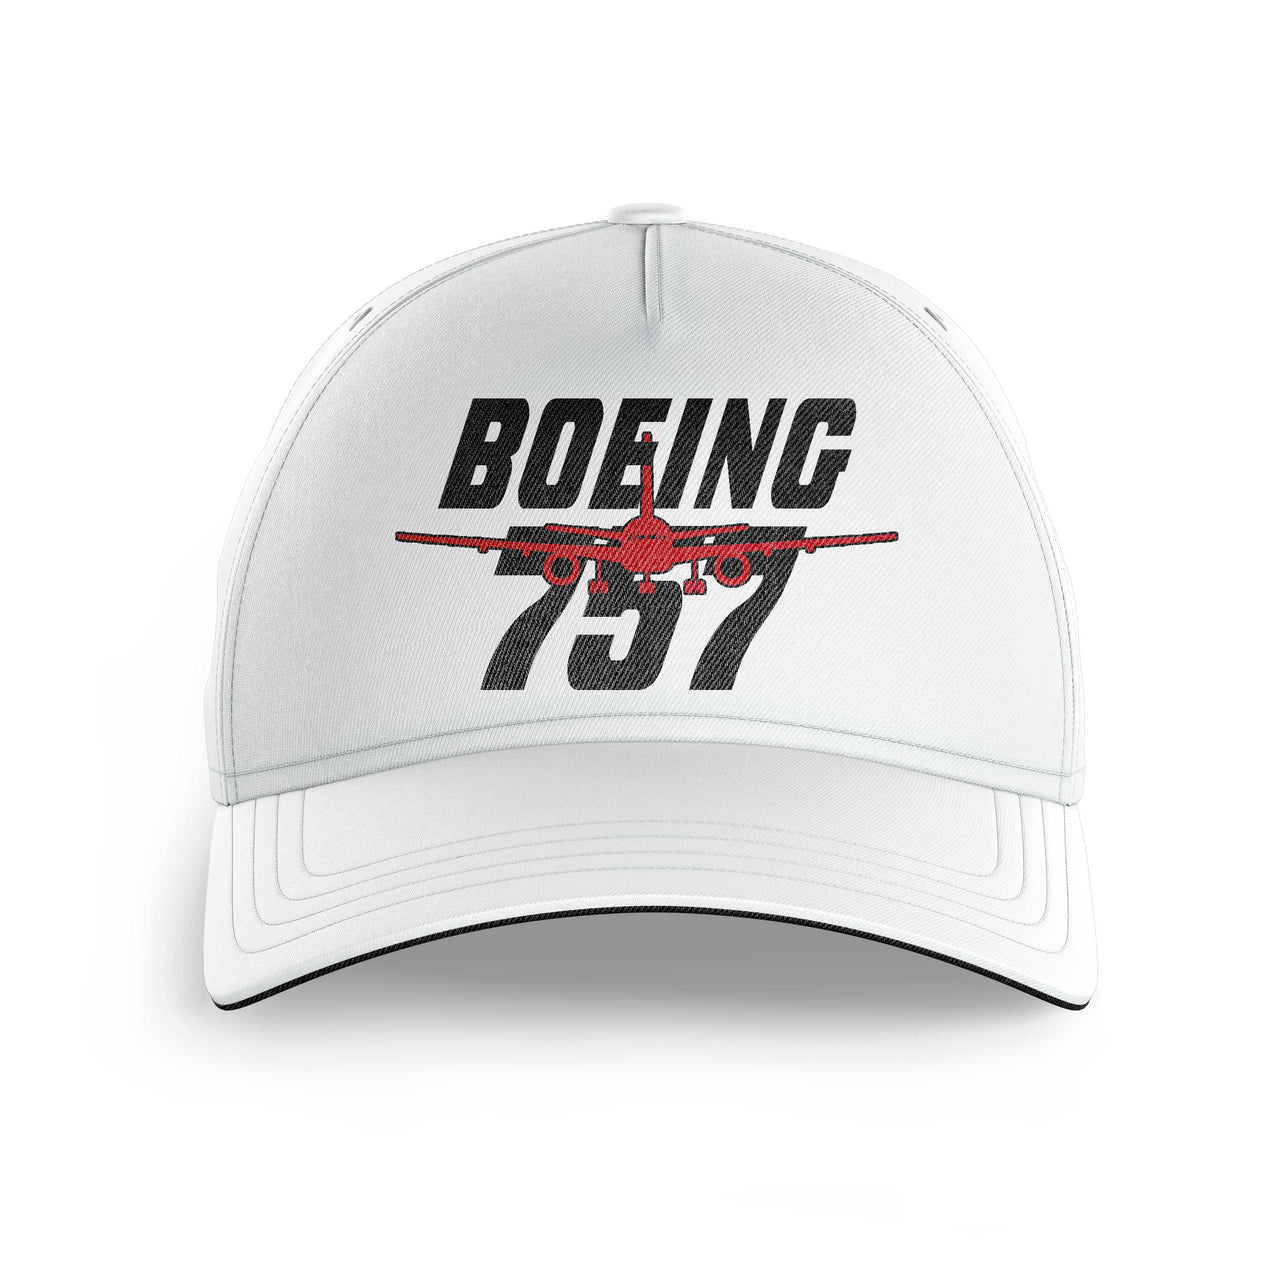 Amazing Boeing 757 Printed Hats